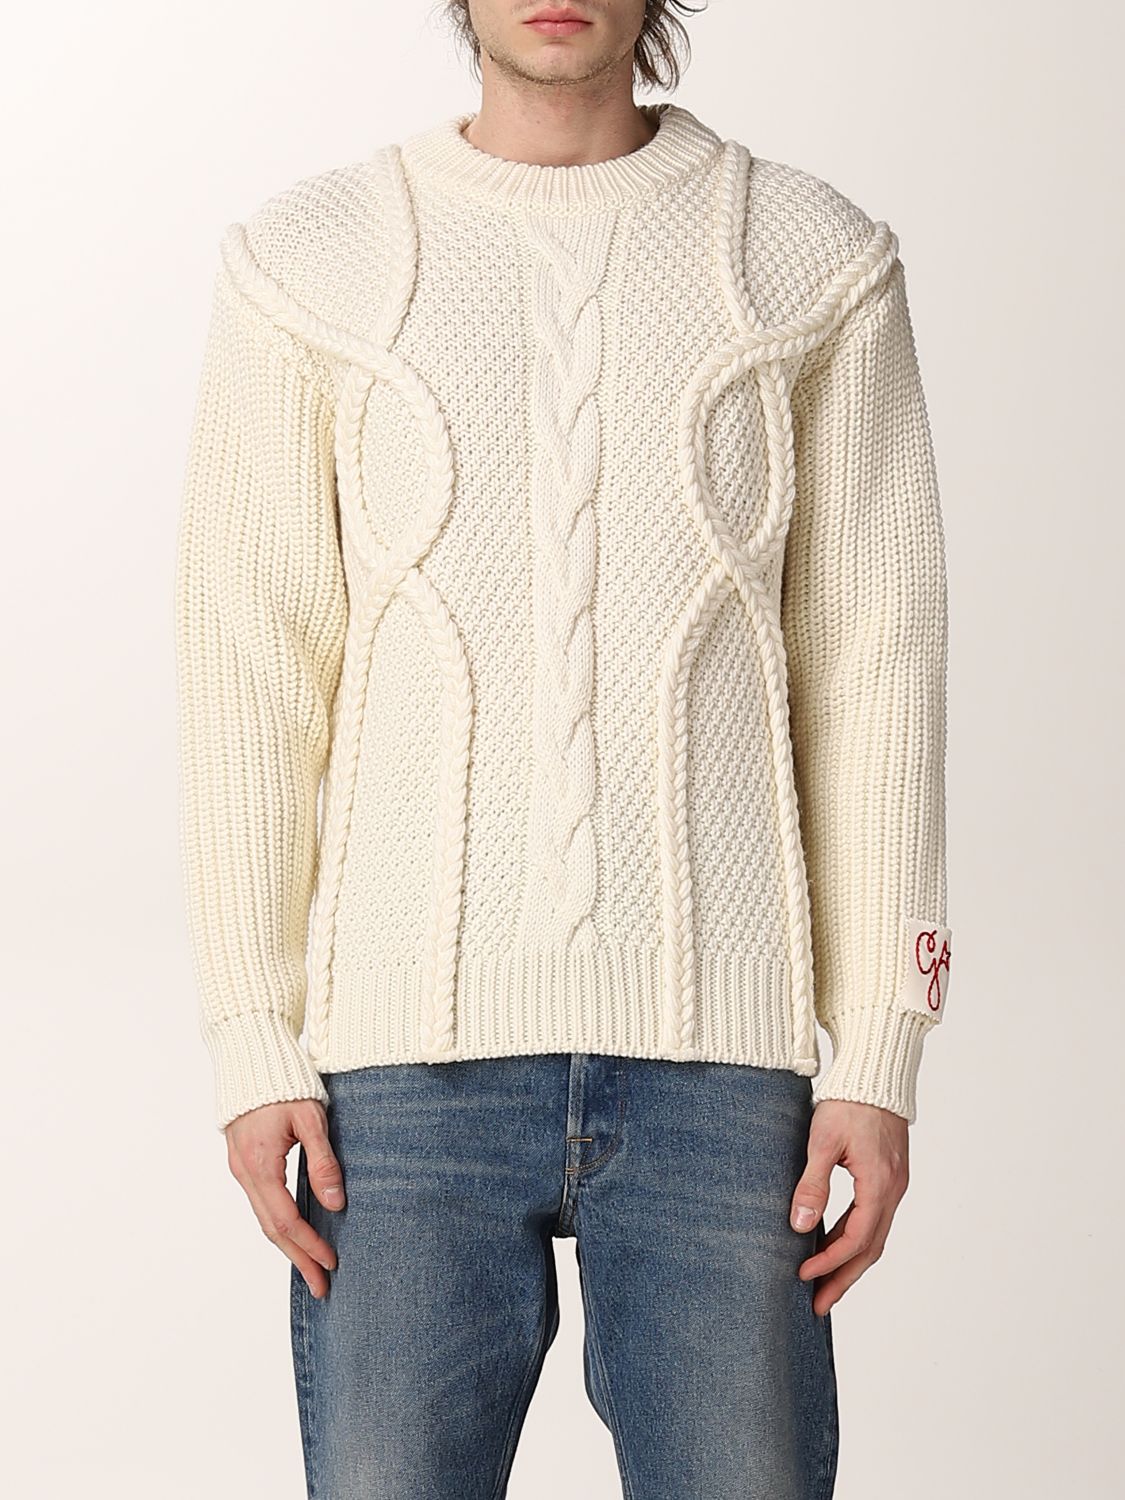 GOLDEN GOOSE: virgin wool sweater - White | Golden Goose sweater ...